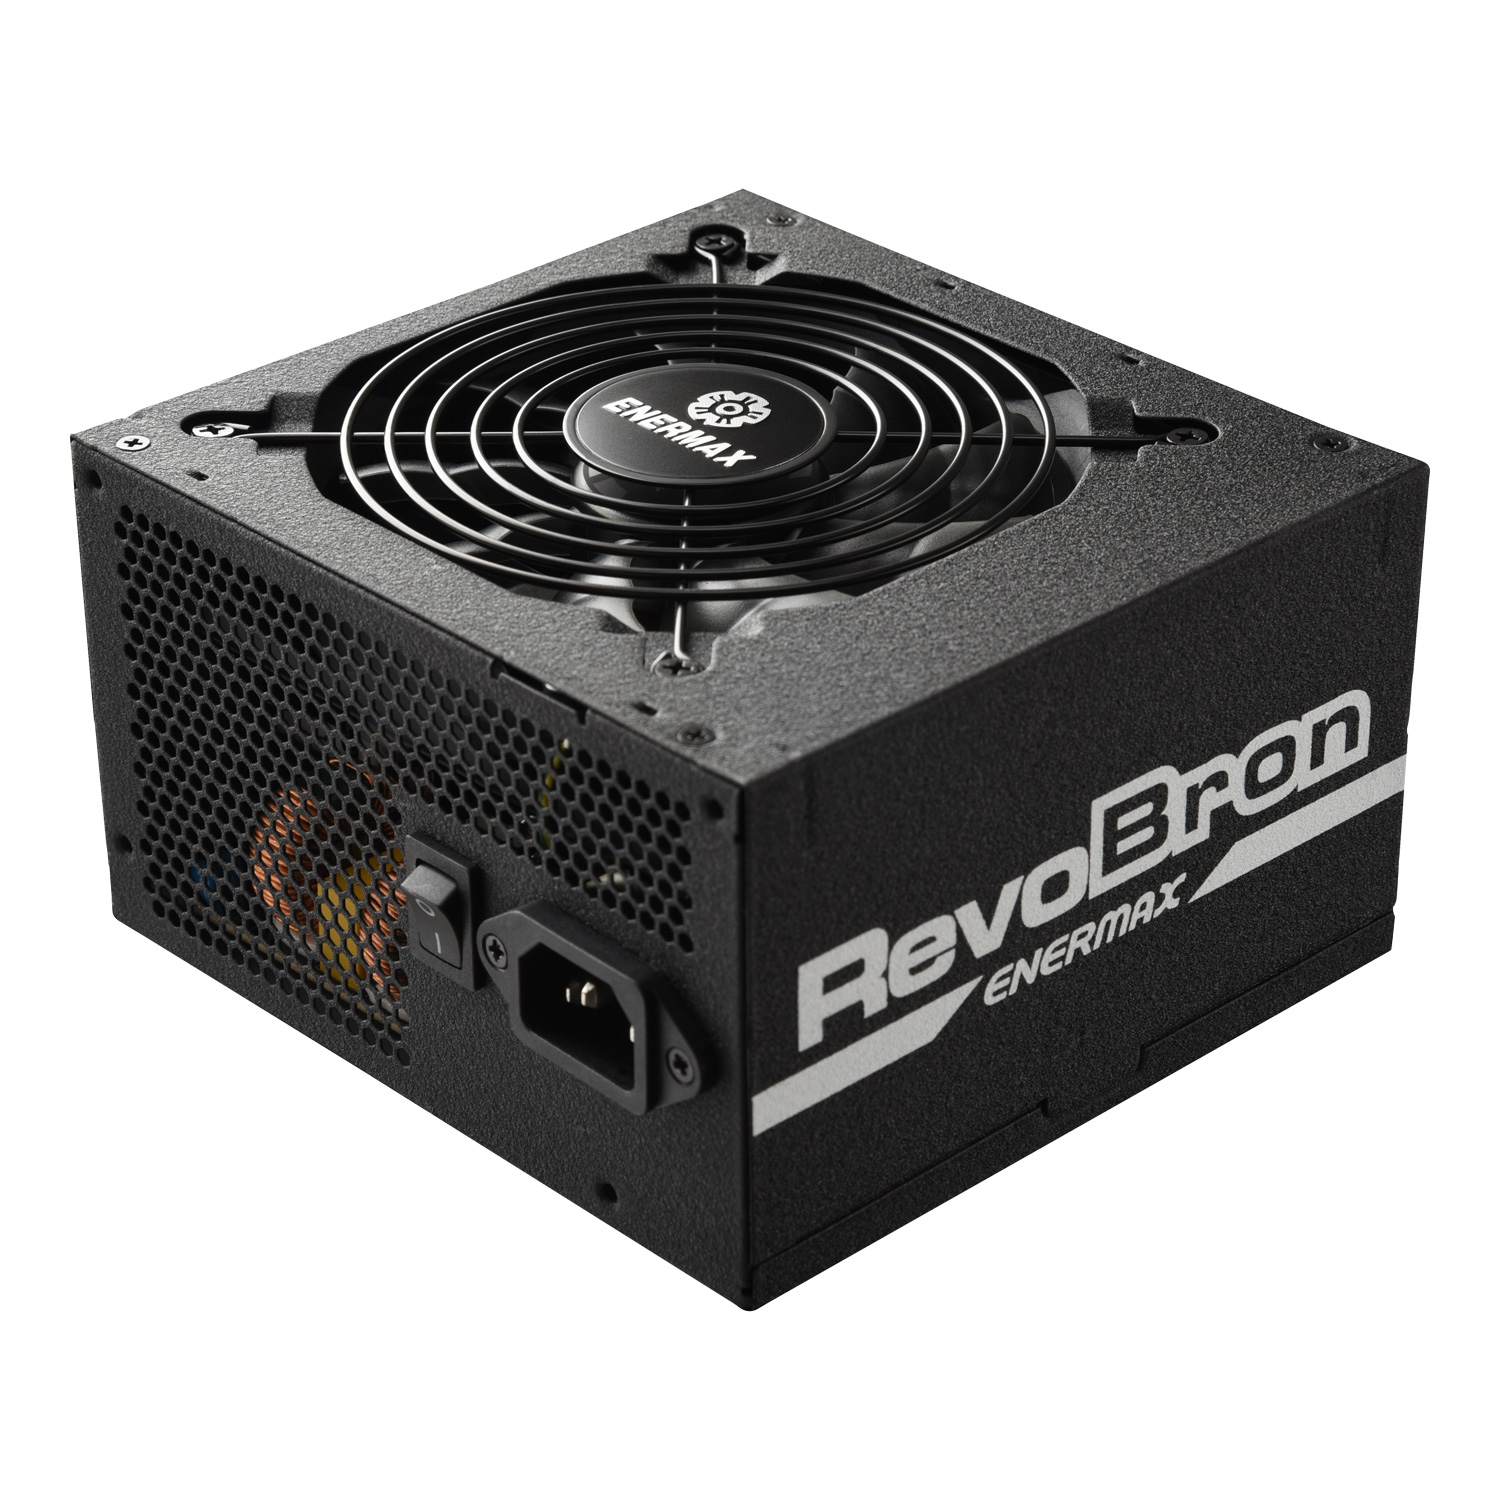 RevoBron 700W